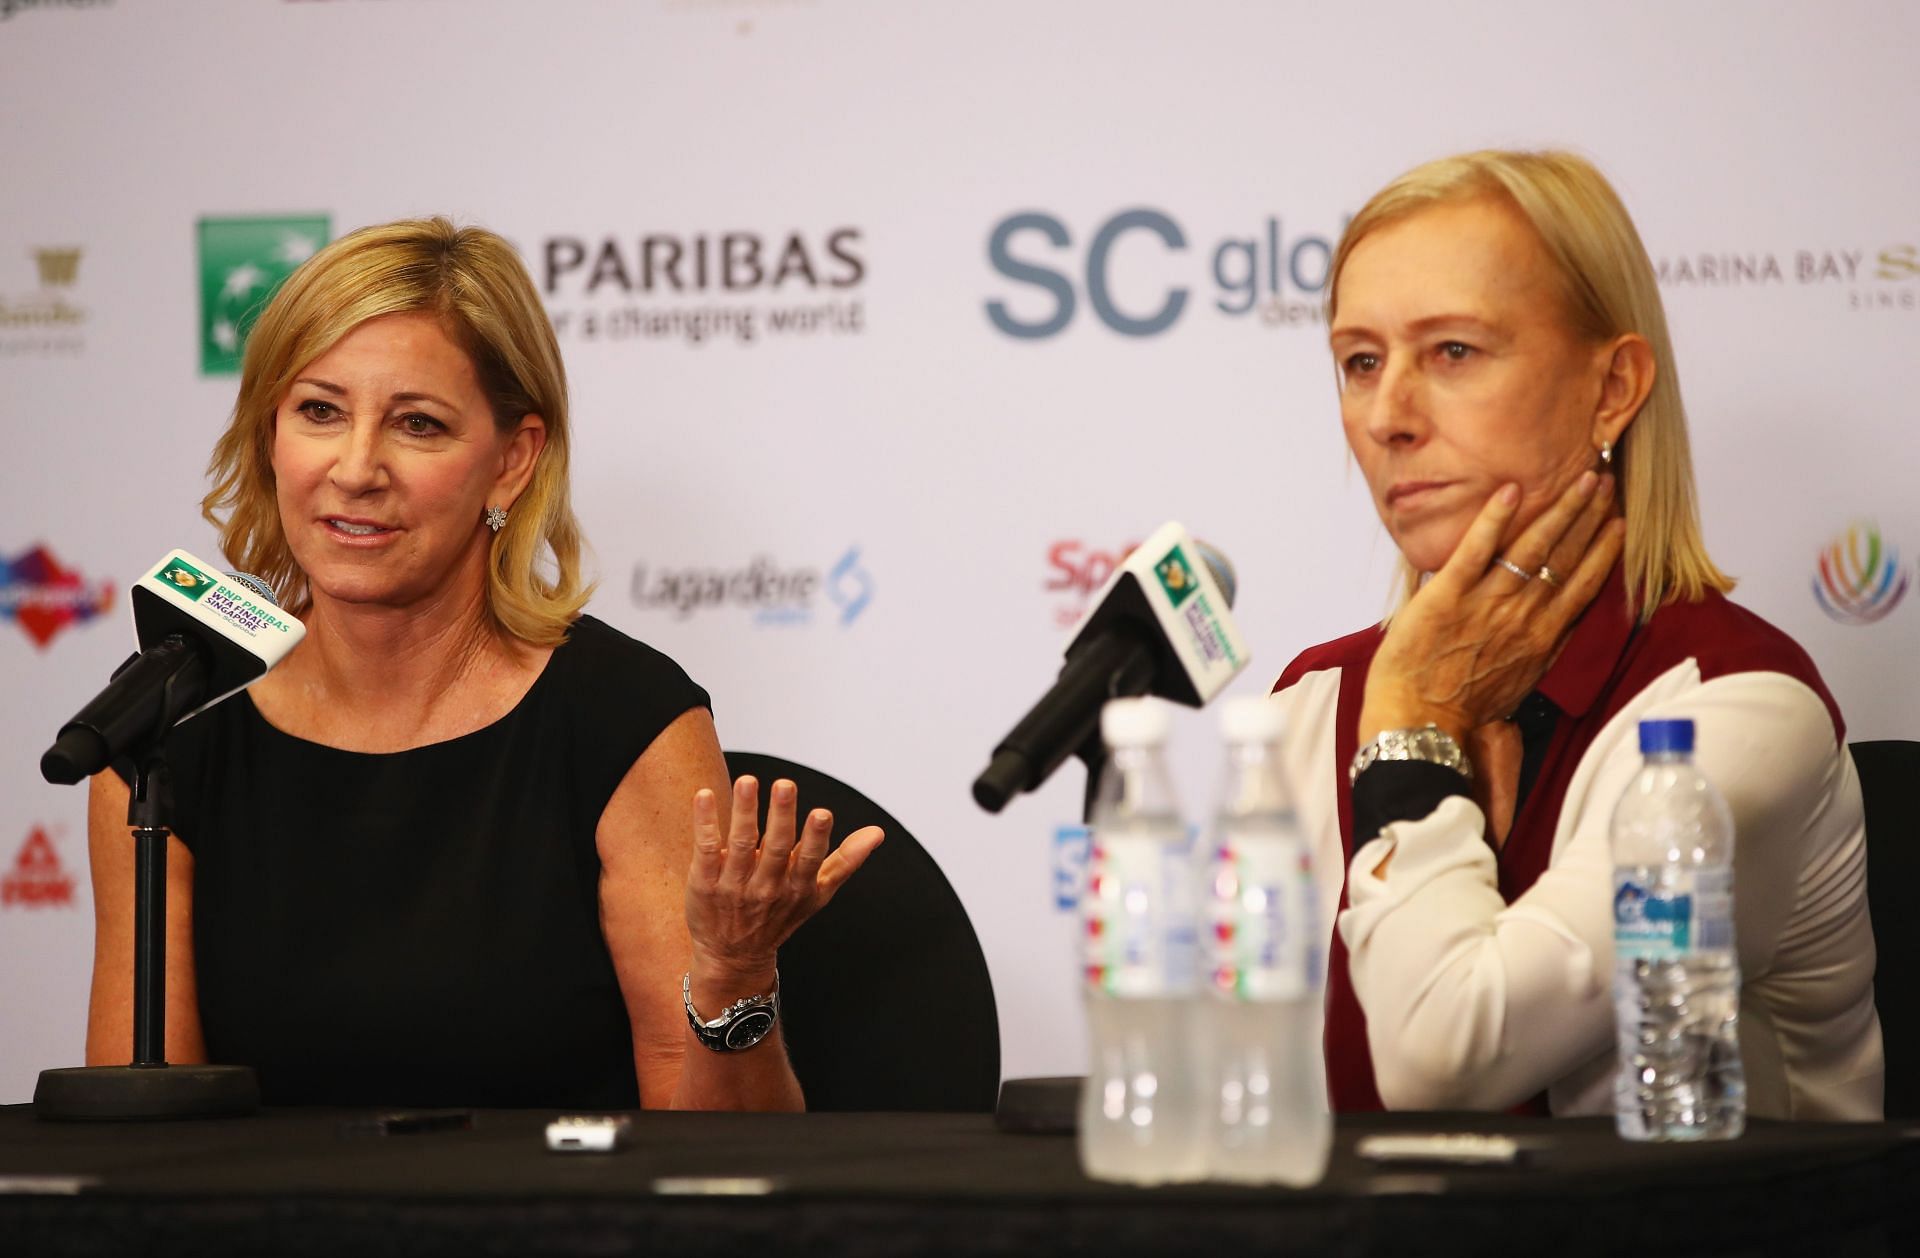 Chris Evert and Martina Navratilova pictured at a press conference.